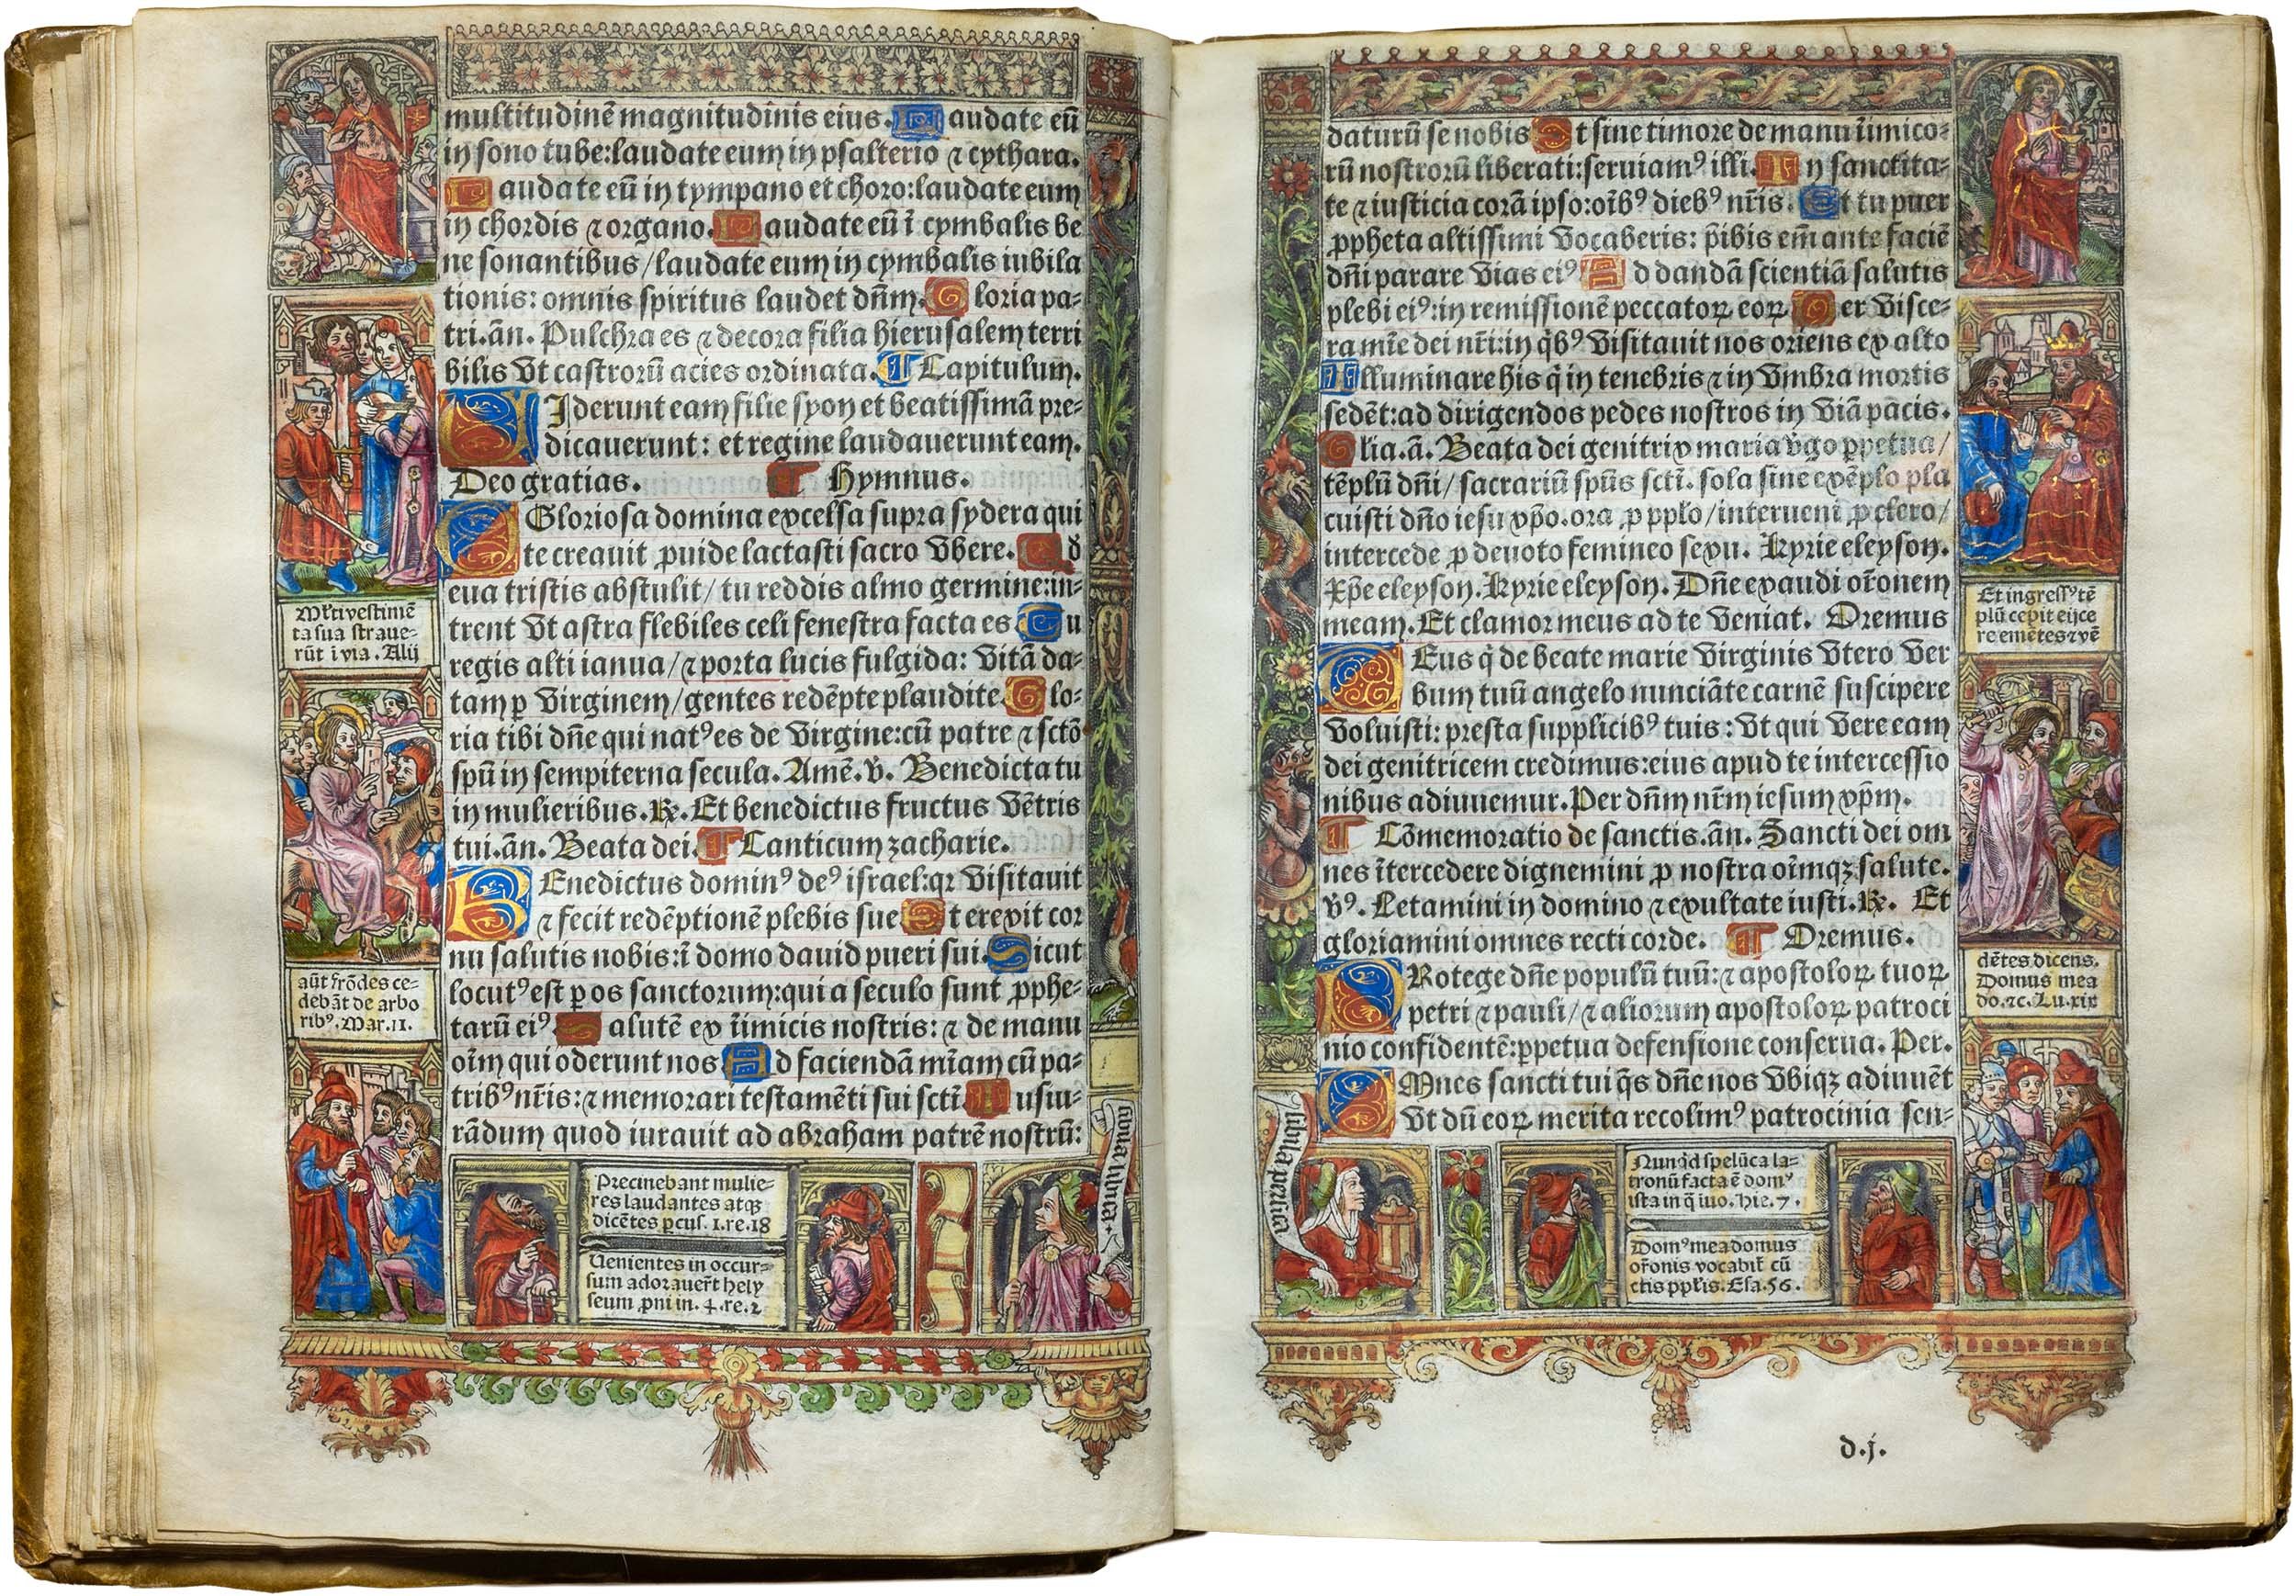 Horae-bmv-31-march-1511-kerver-printed-book-of-hours-illuminated-copy-vellum-28.jpg